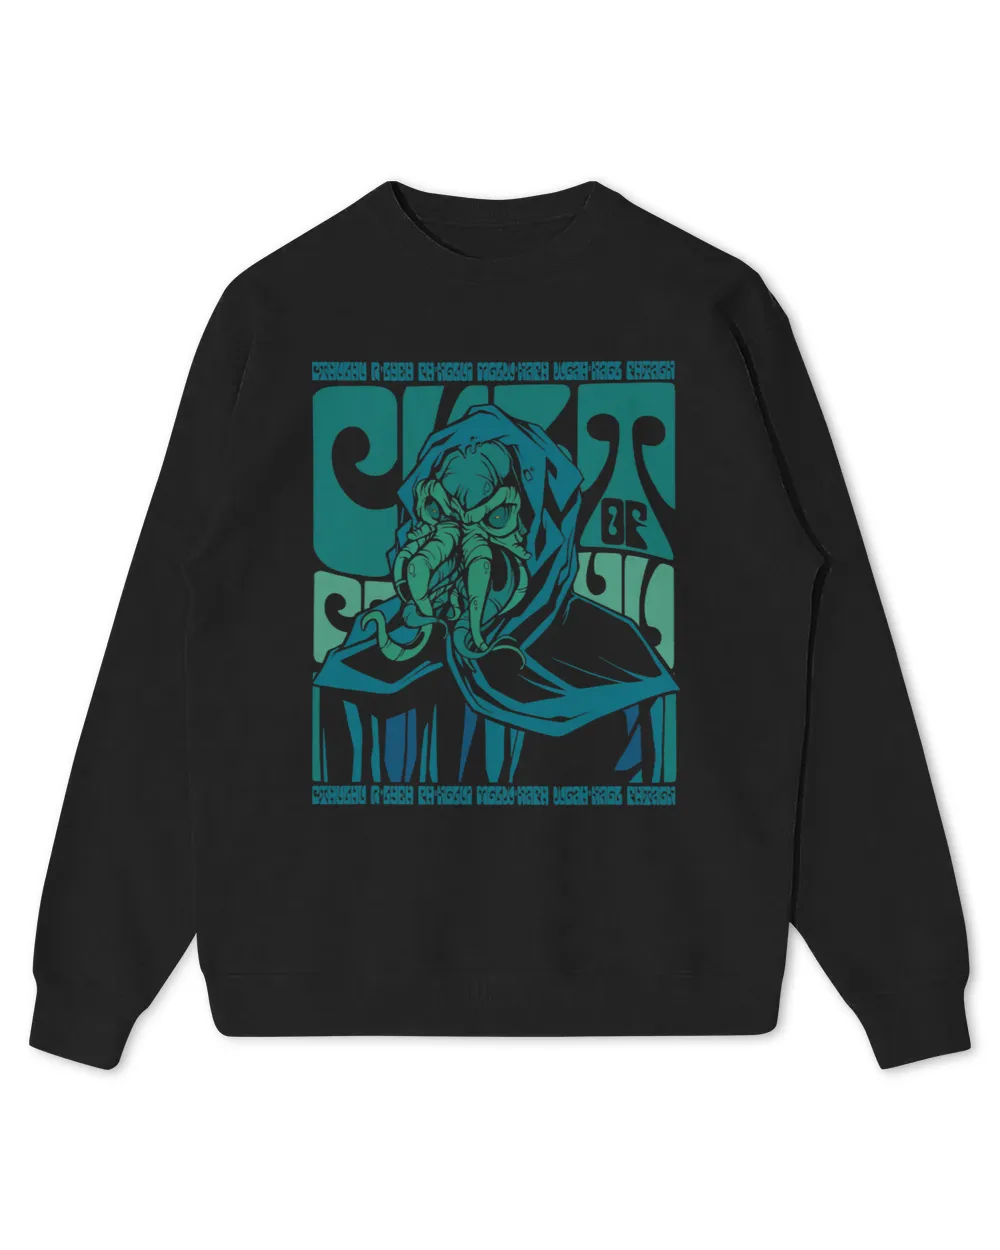 Cthulhu Octopus Kraken 90s Eboy Japanese Clothing Aesthetic